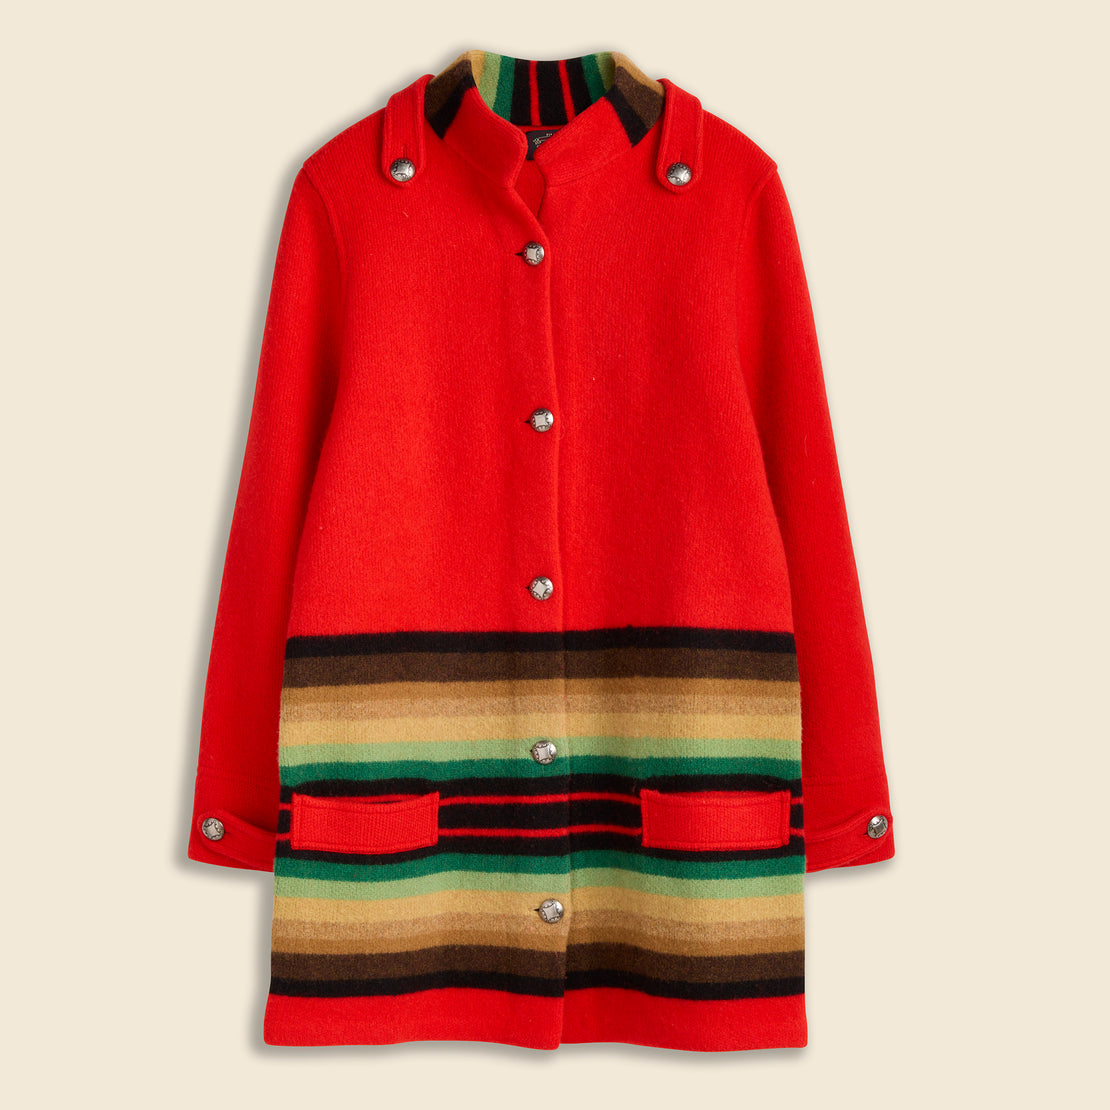 RRL Birdseye Jacquard Sweater Jacket - Red Multi